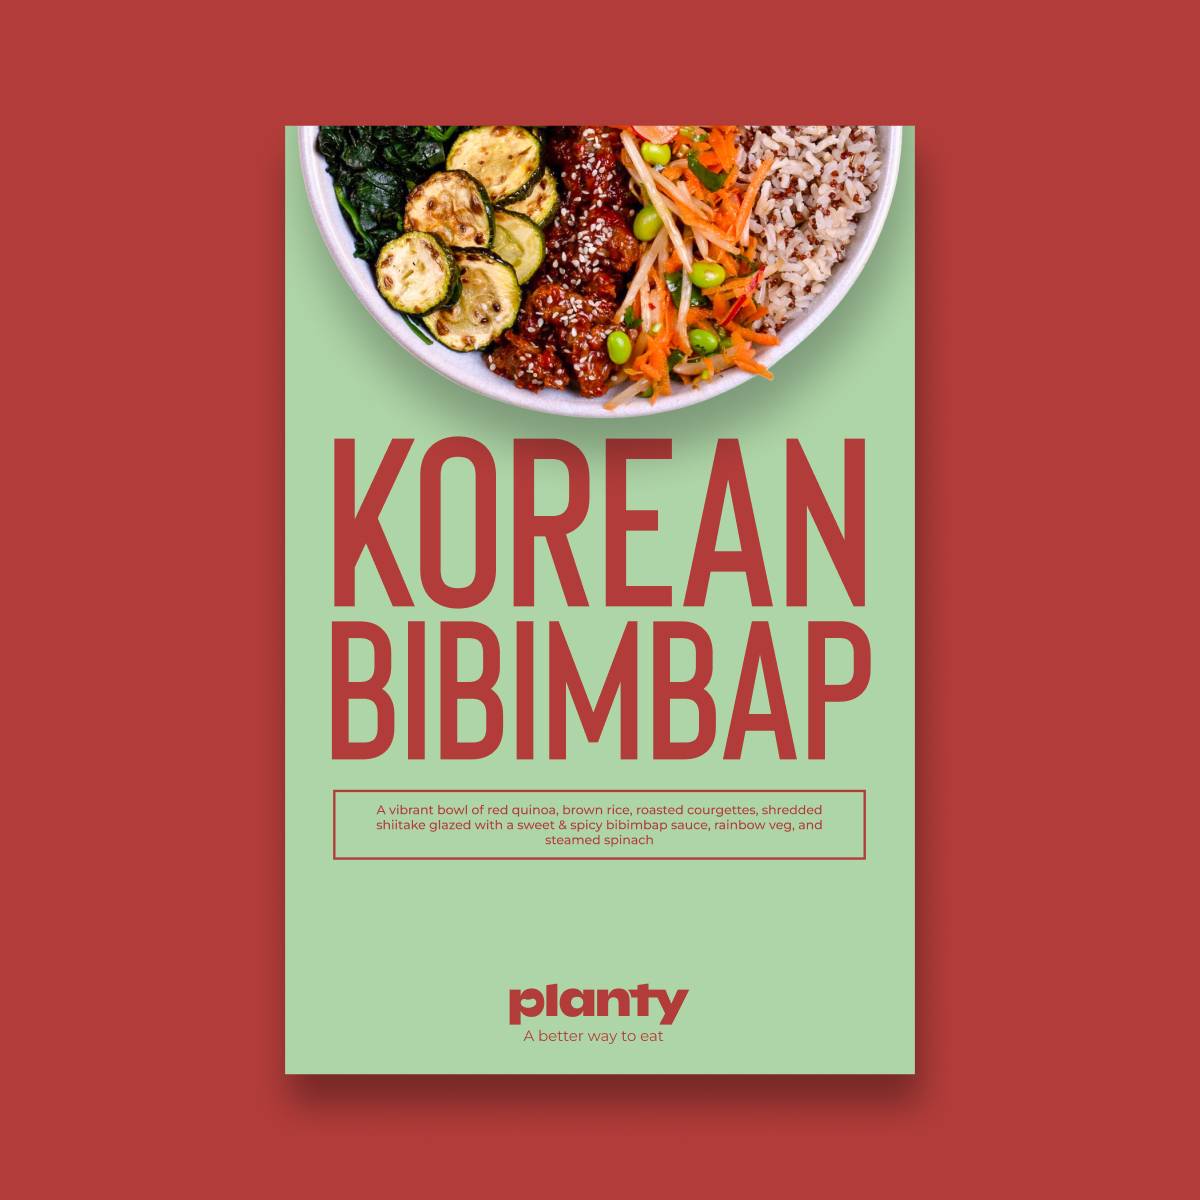 Korean Bibimbap image 2